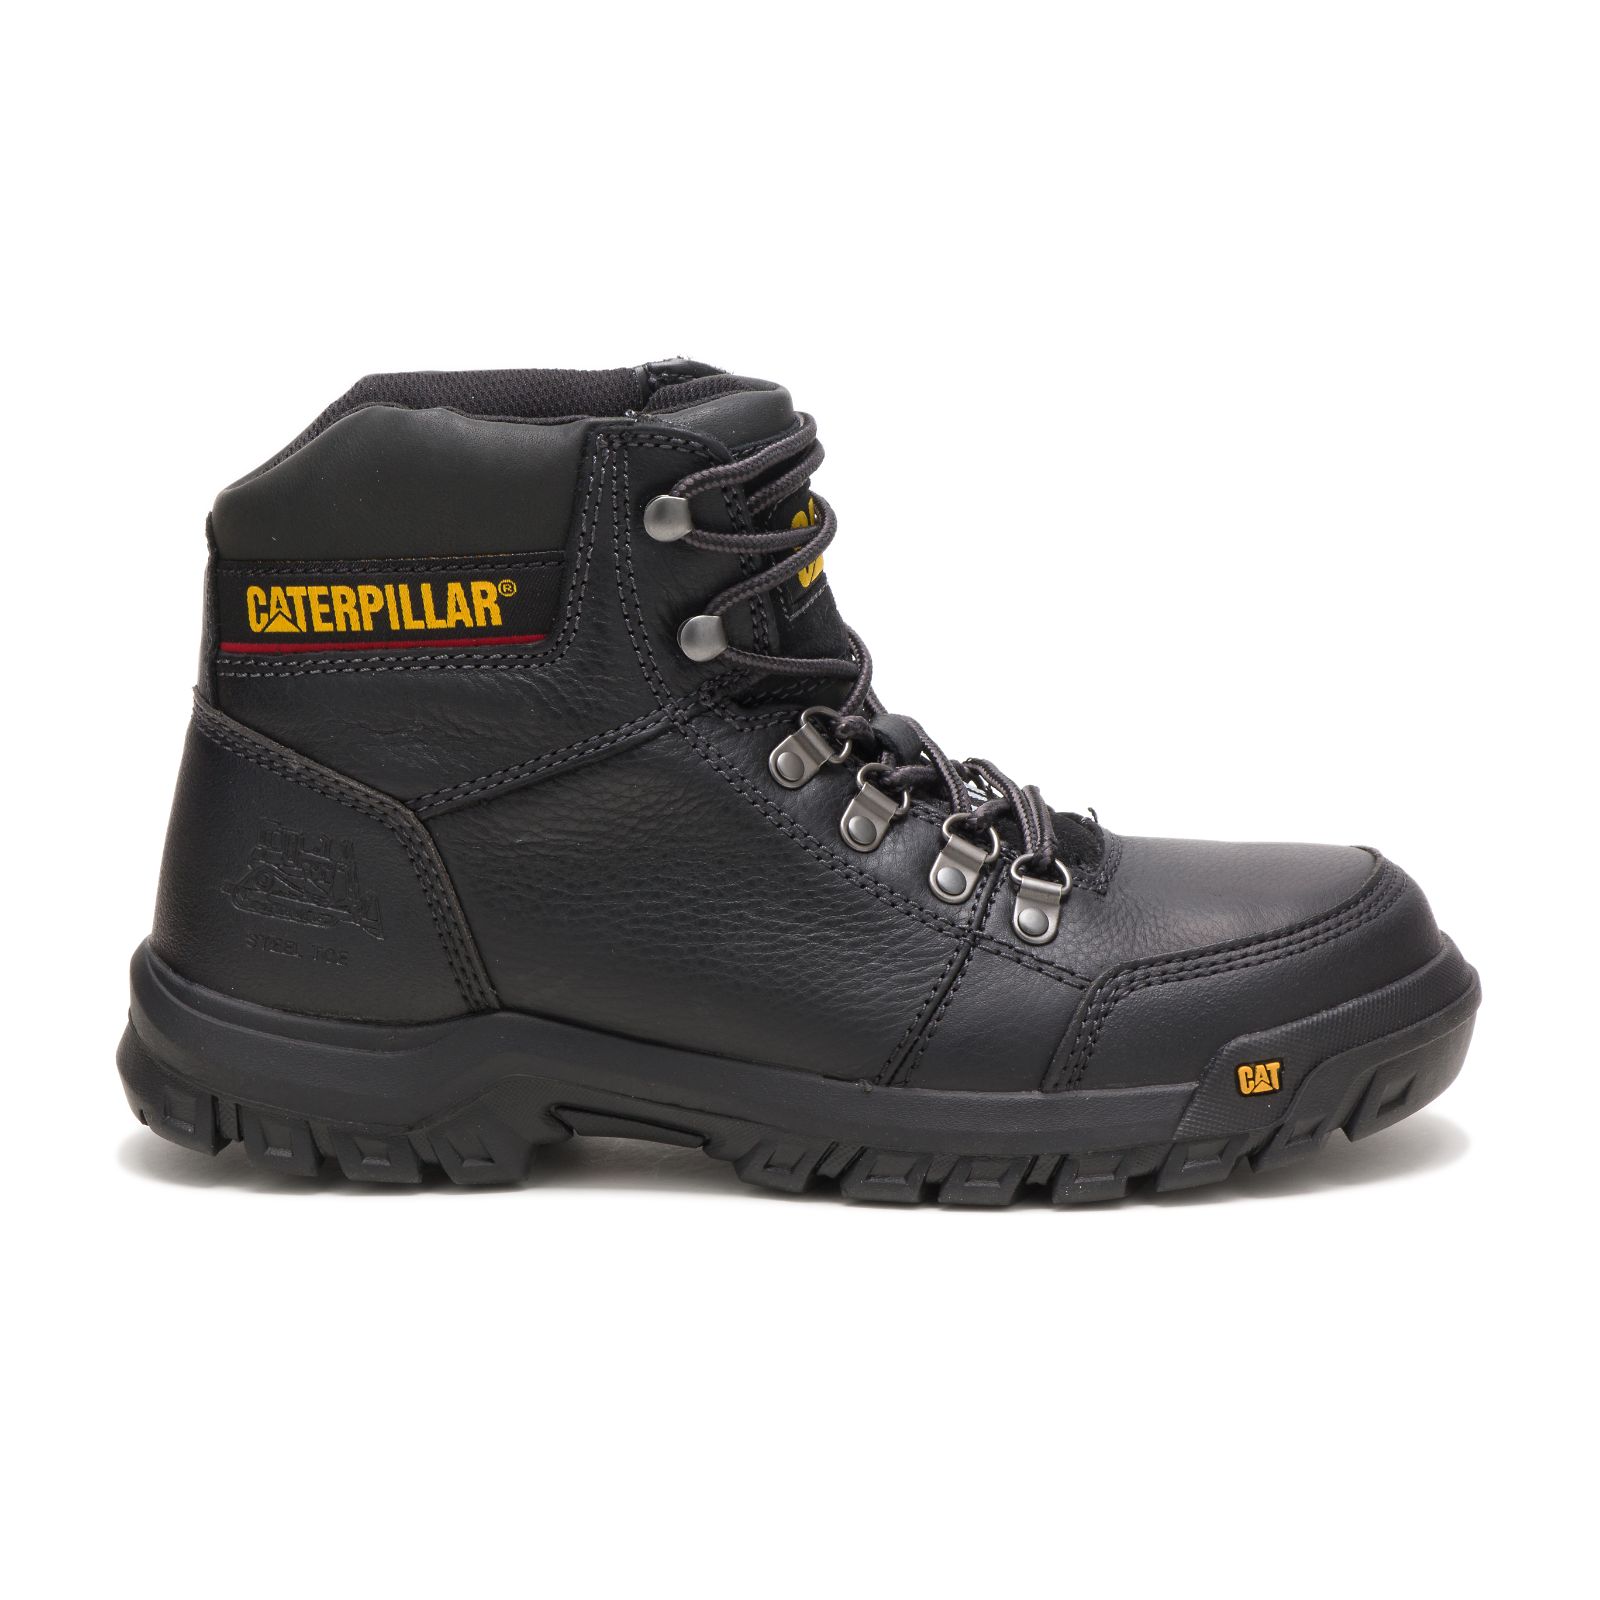 Caterpillar Outline Steel Toe Philippines - Mens Steel Toe Boots - Black 02315USHT